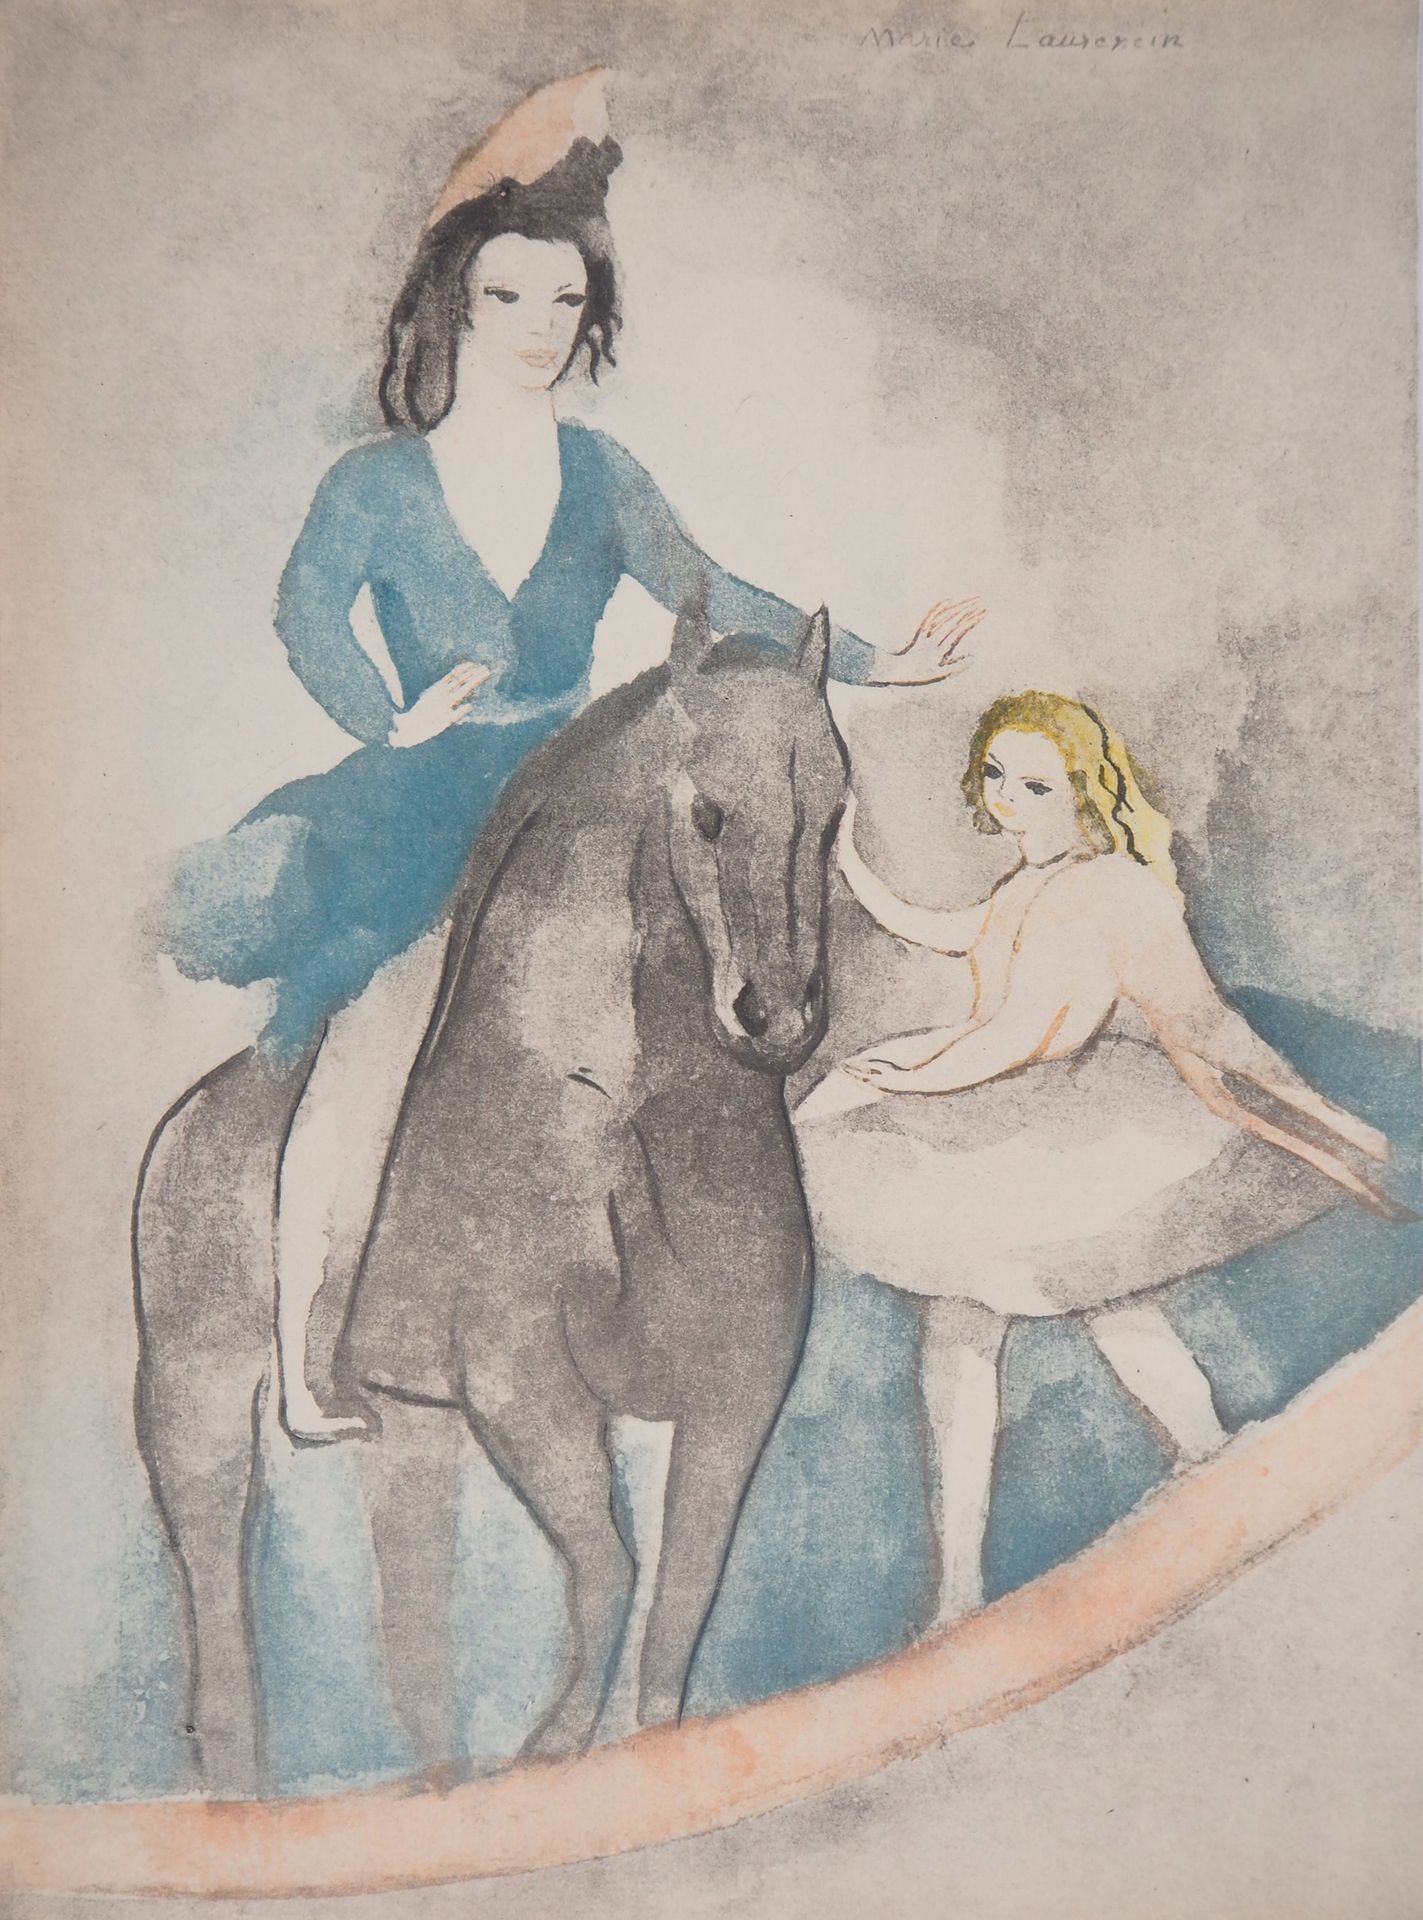 MARIE LAURENCIN Marie LAURENCIN

关于舞蹈的对话

阿凯斯牛皮纸上的彩色蚀刻画

板块中的签名

38 x 28 cm

状况极&hellip;